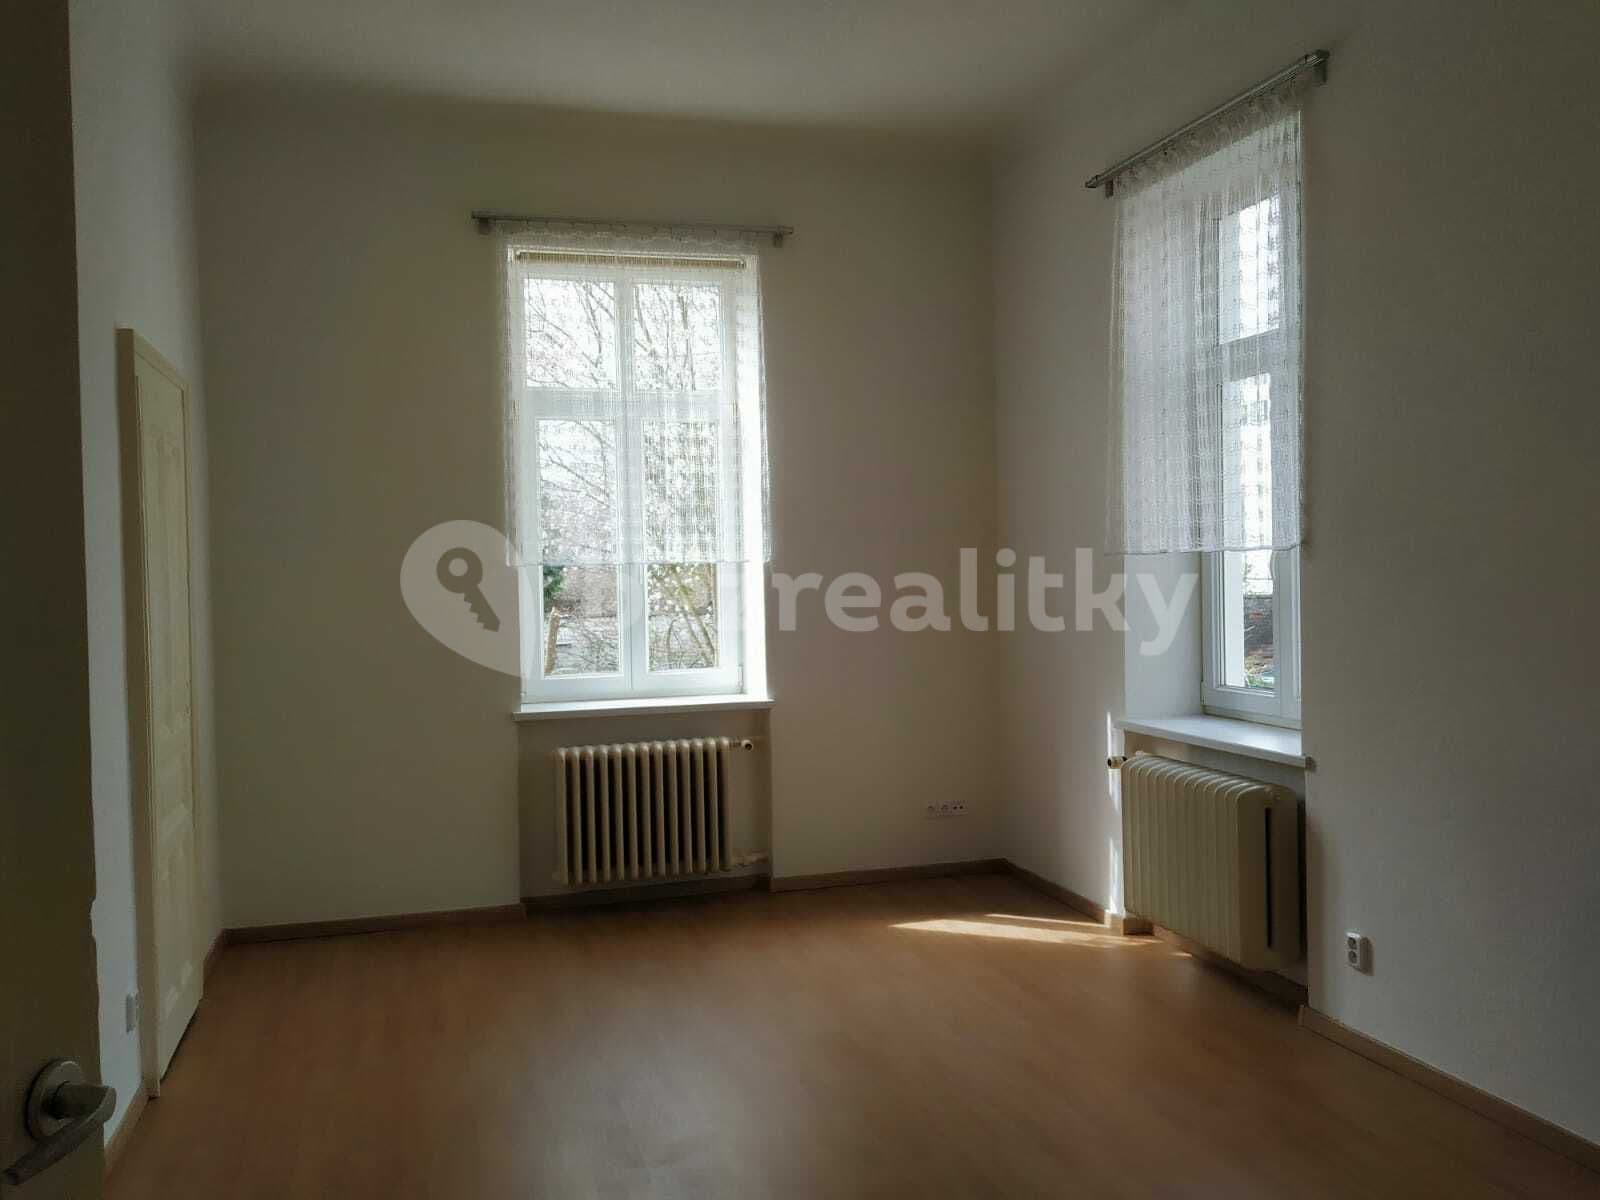 3 bedroom flat to rent, 85 m², Havlíčkova, Prostějov, Olomoucký Region